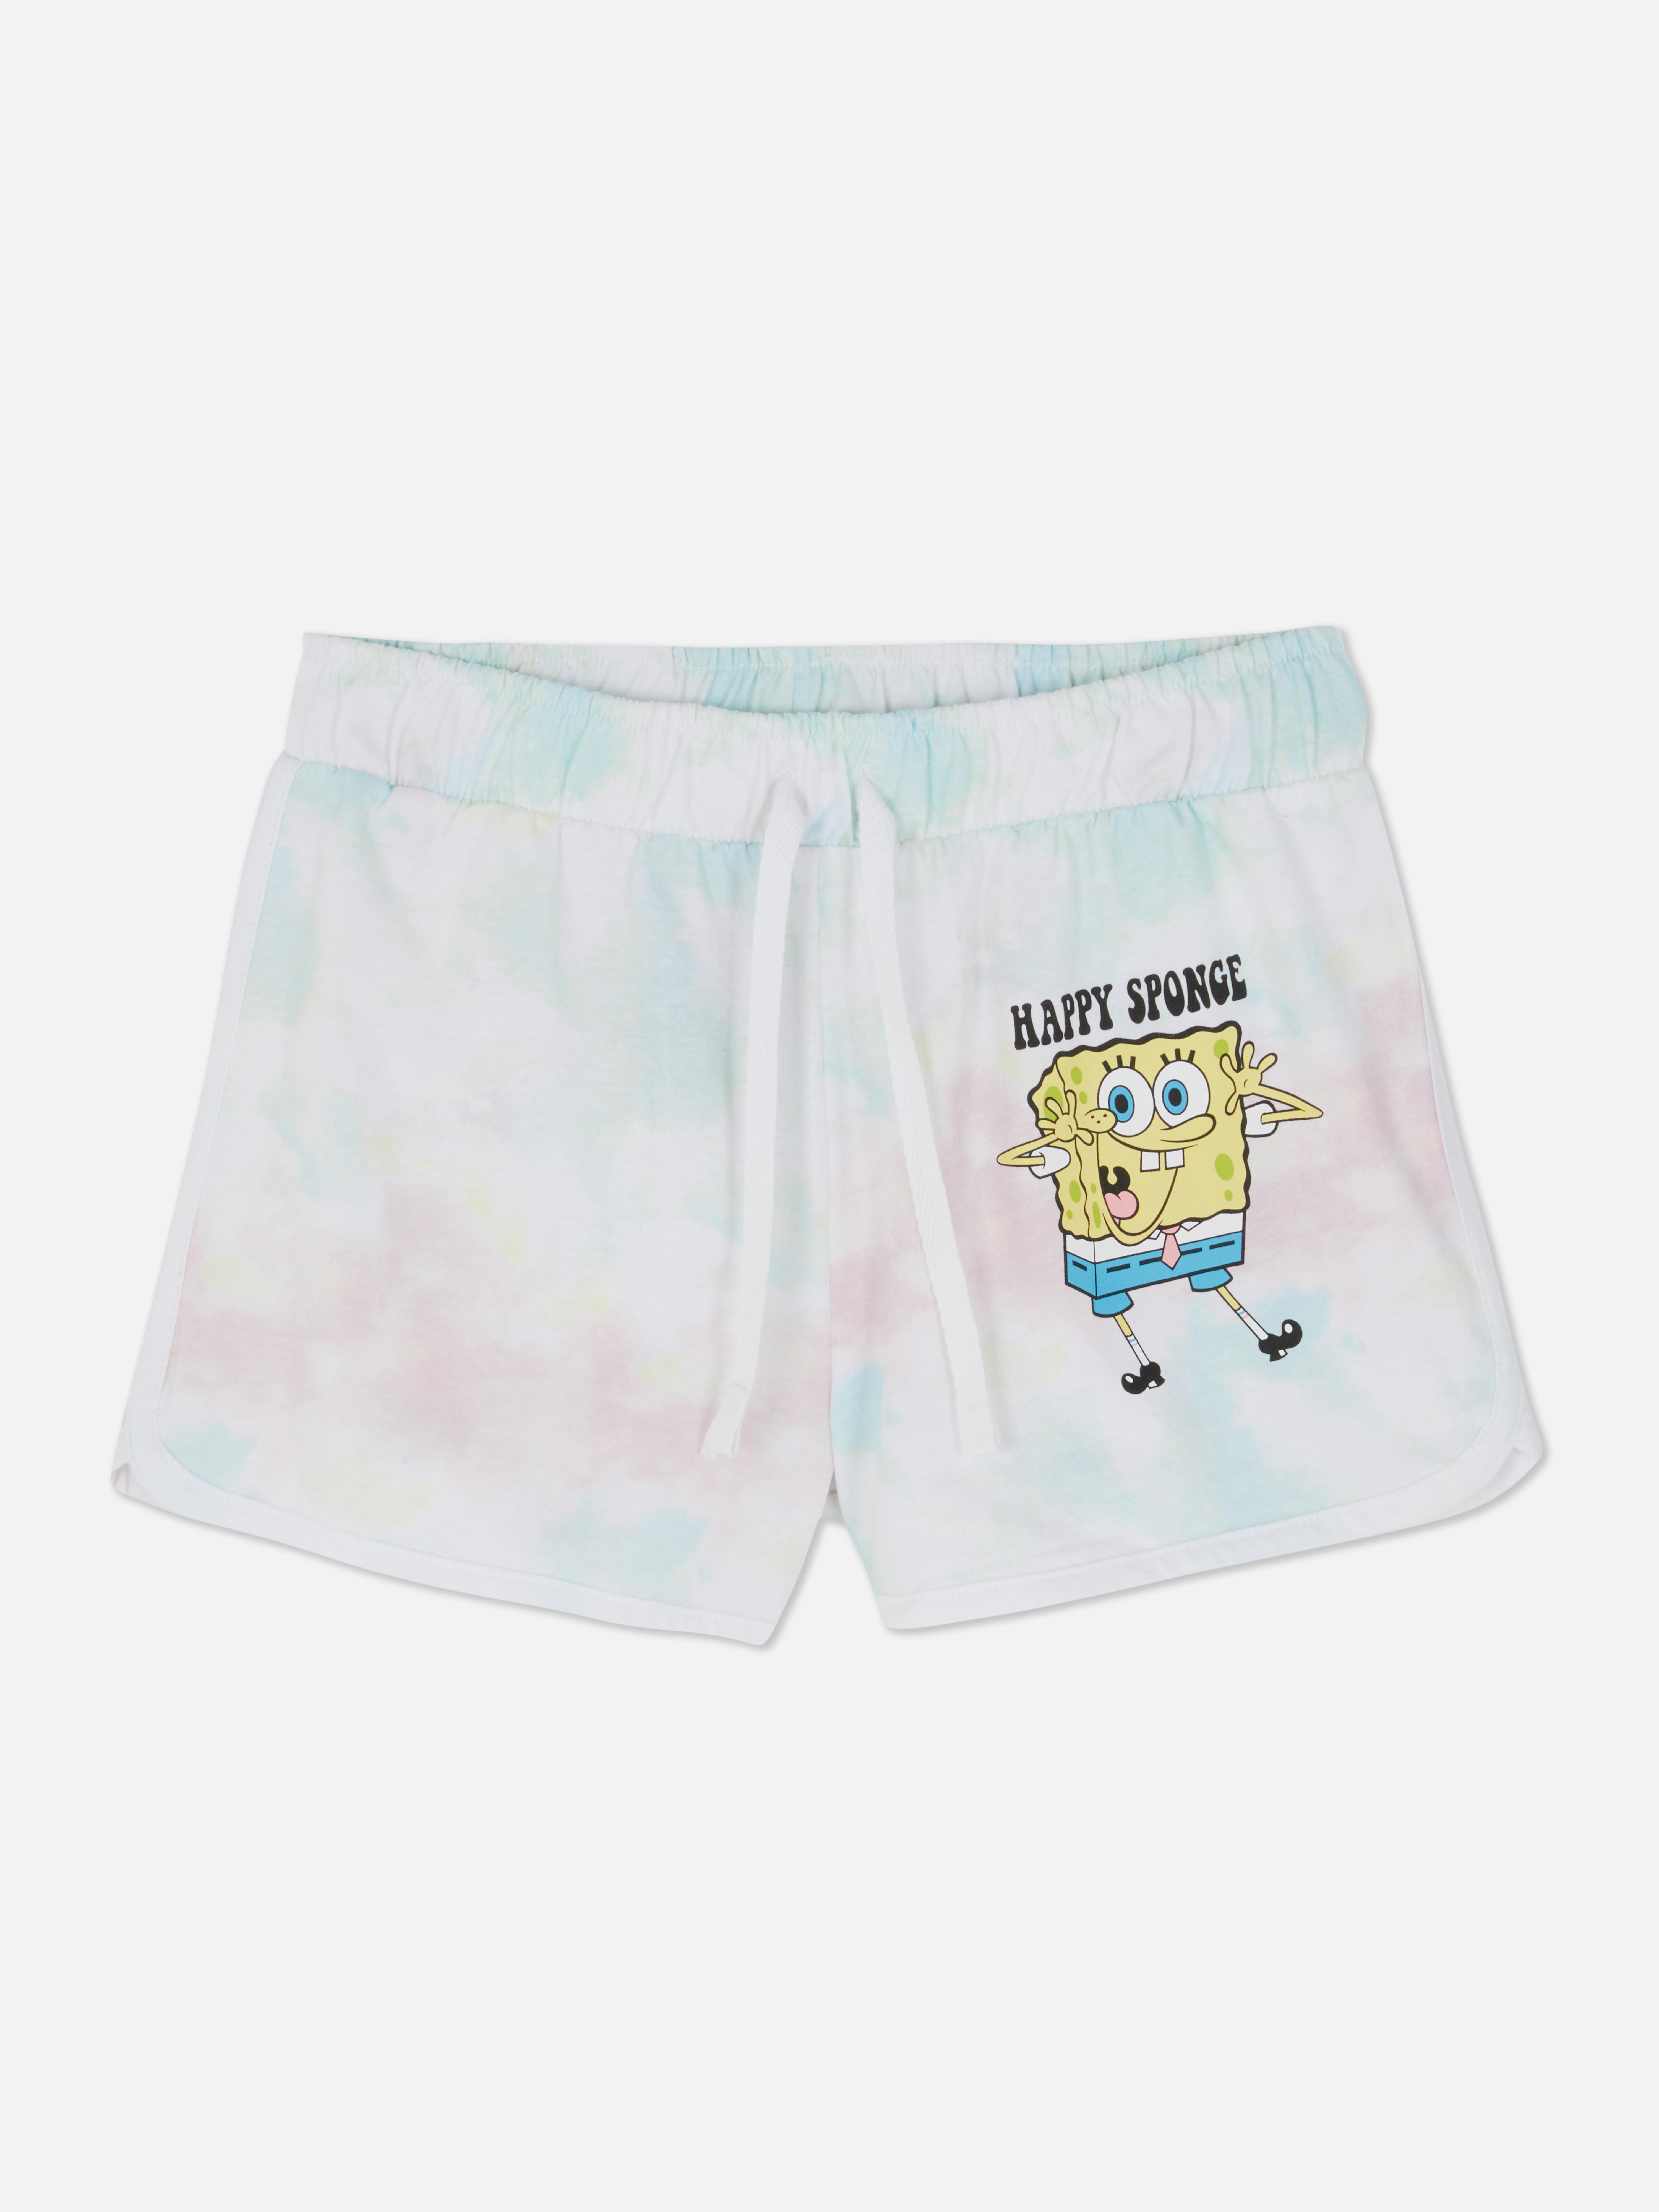 SpongeBob SquarePants Tie-Dye Shorts